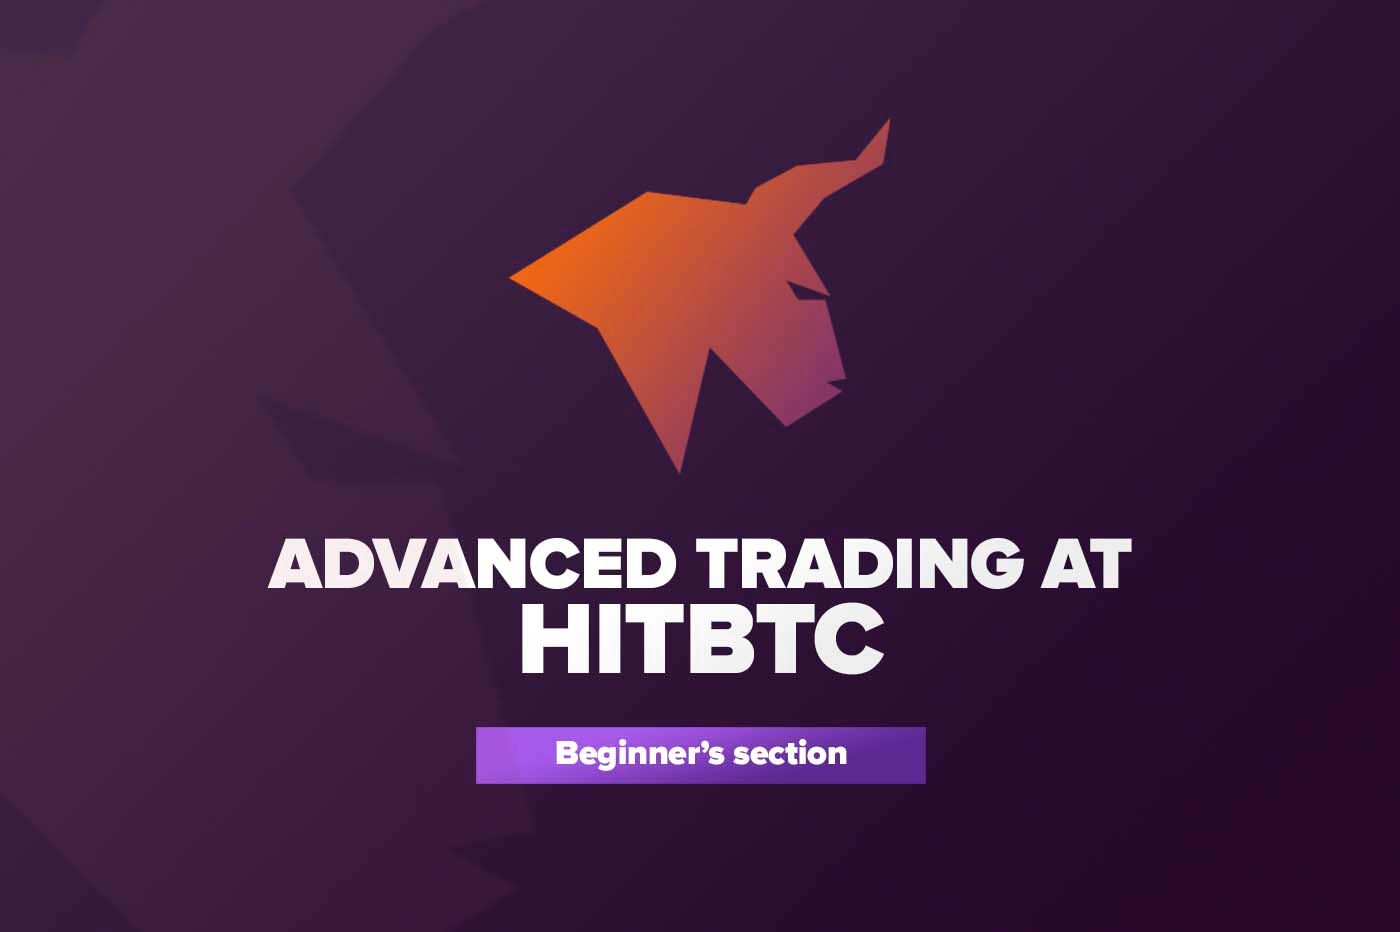 Advanced trading at HITBTC